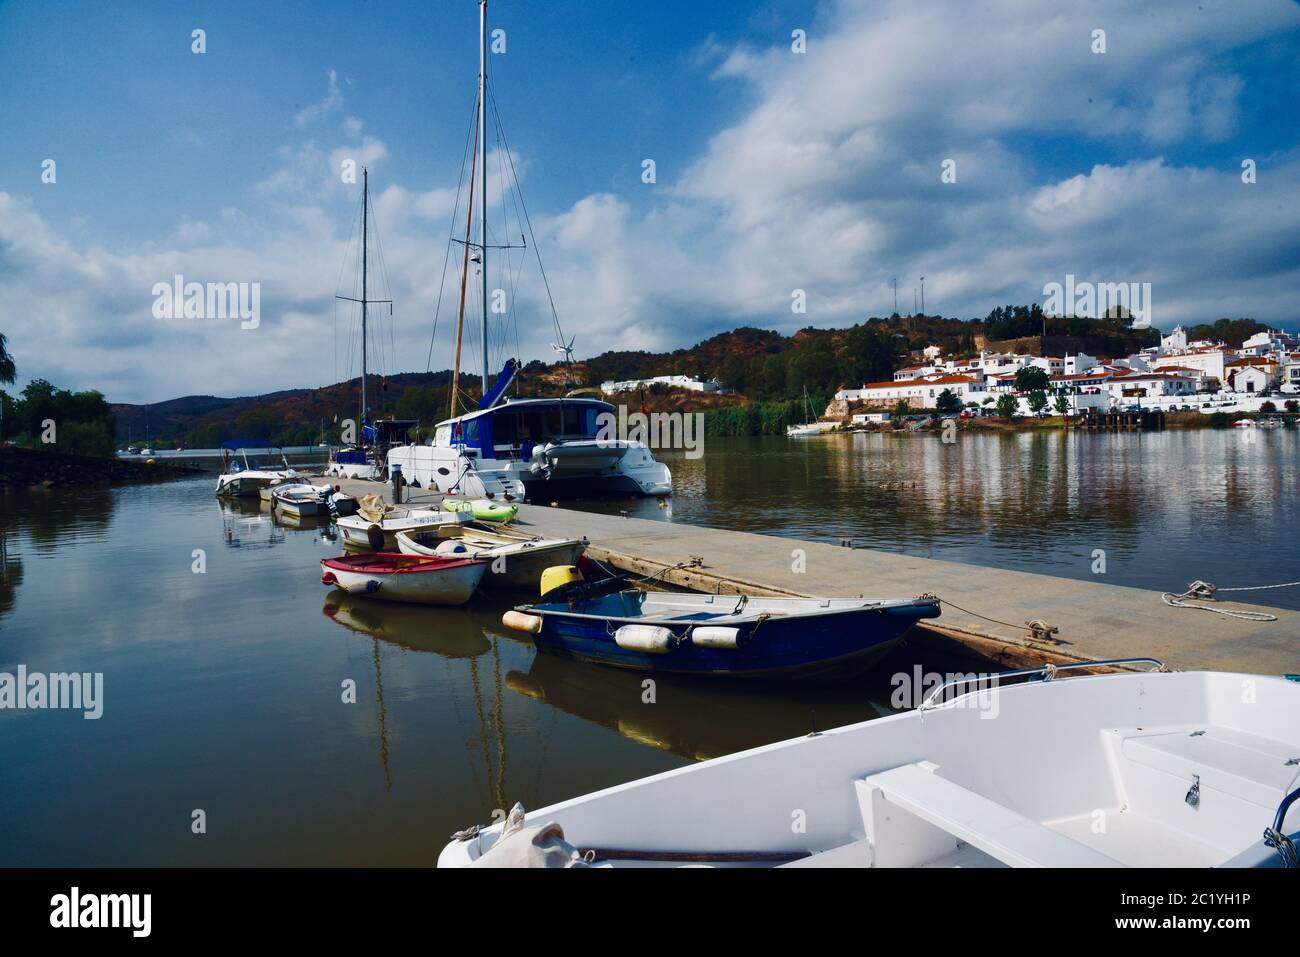 Boats in Alcoutim, Portugal Stock Photo